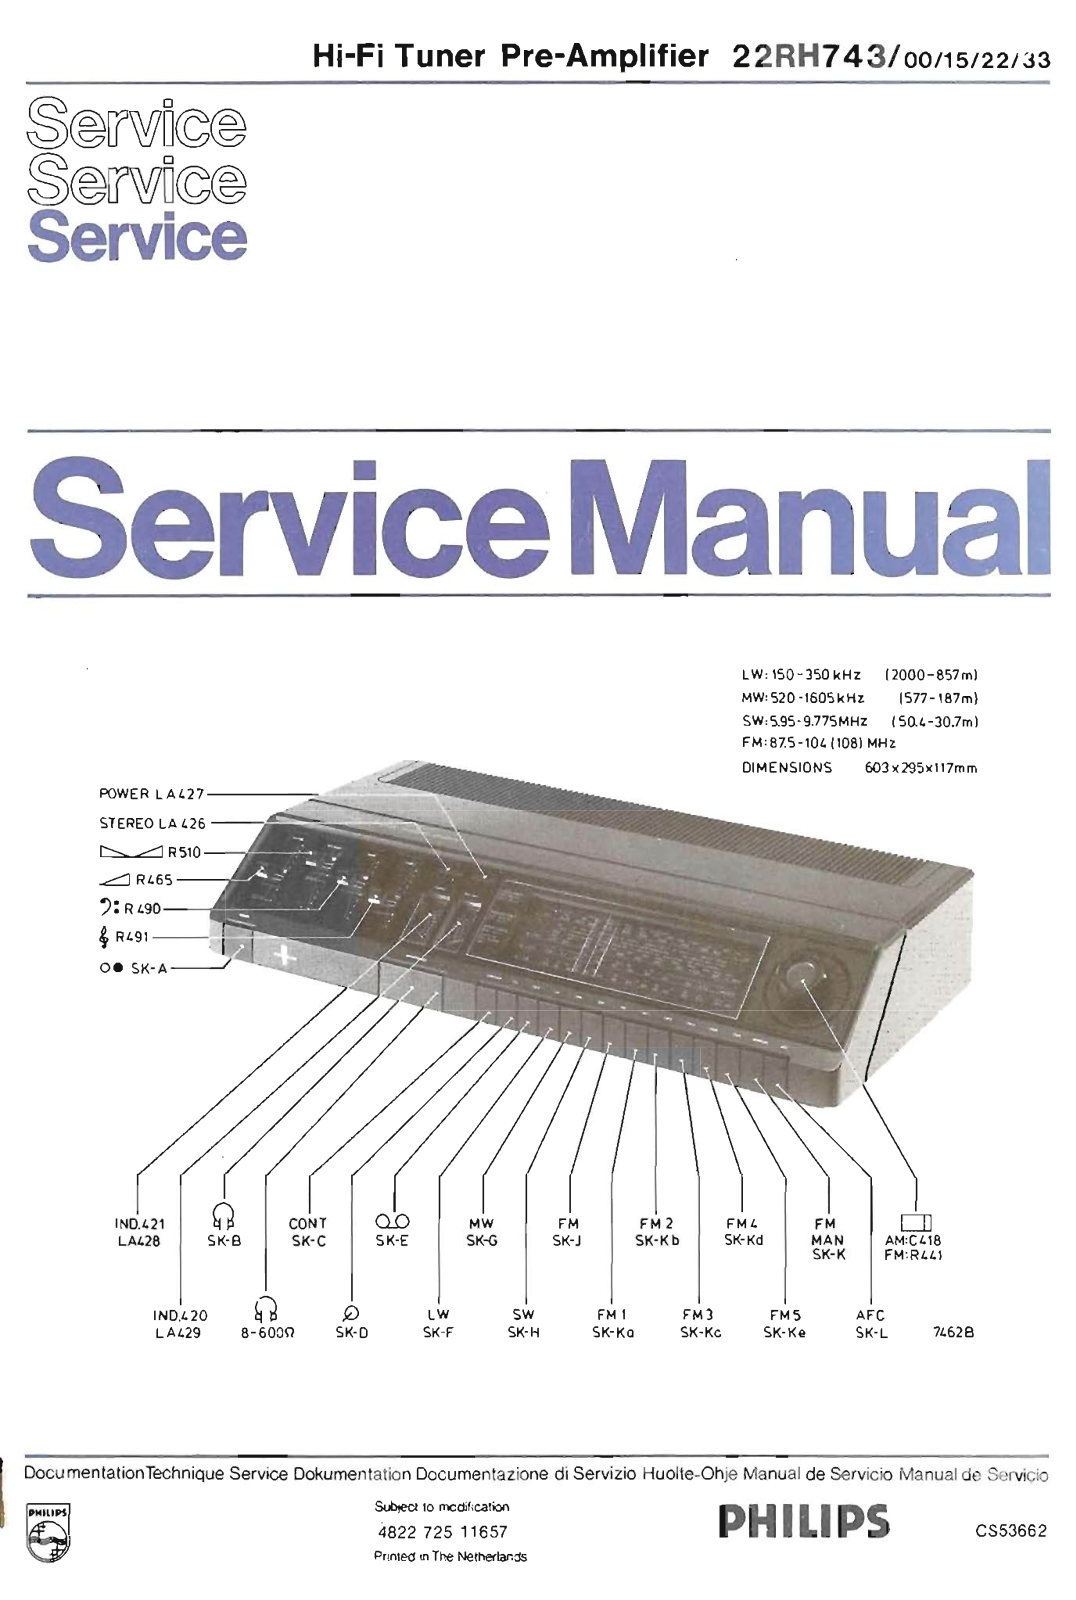 Philips 22-RH-743 Service Manual